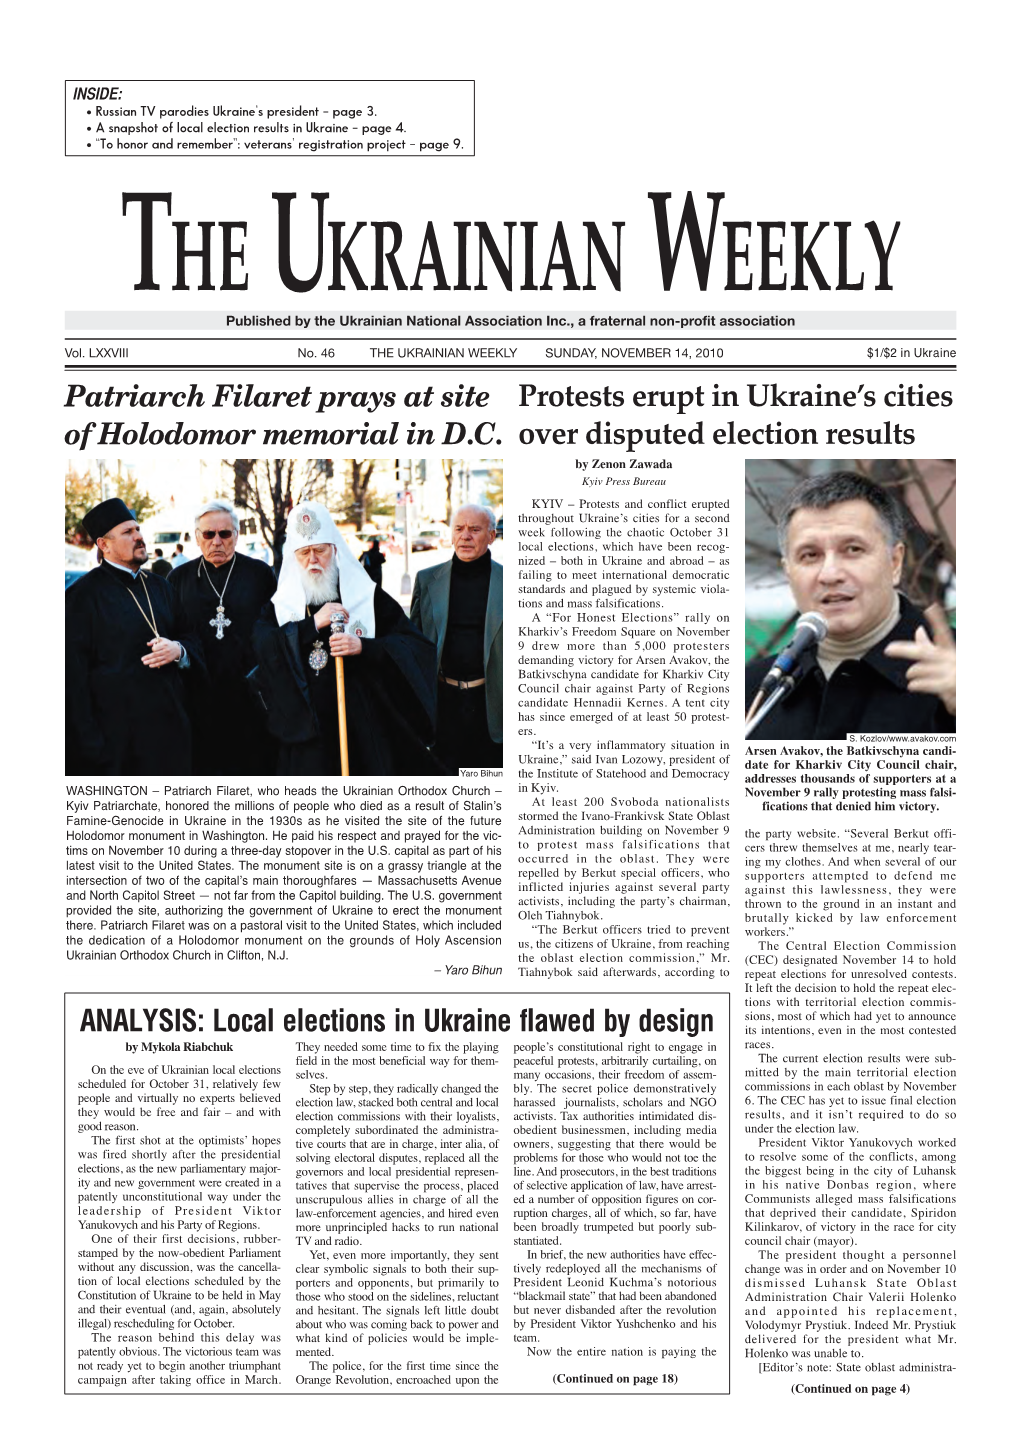 The Ukrainian Weekly 2010, No.46